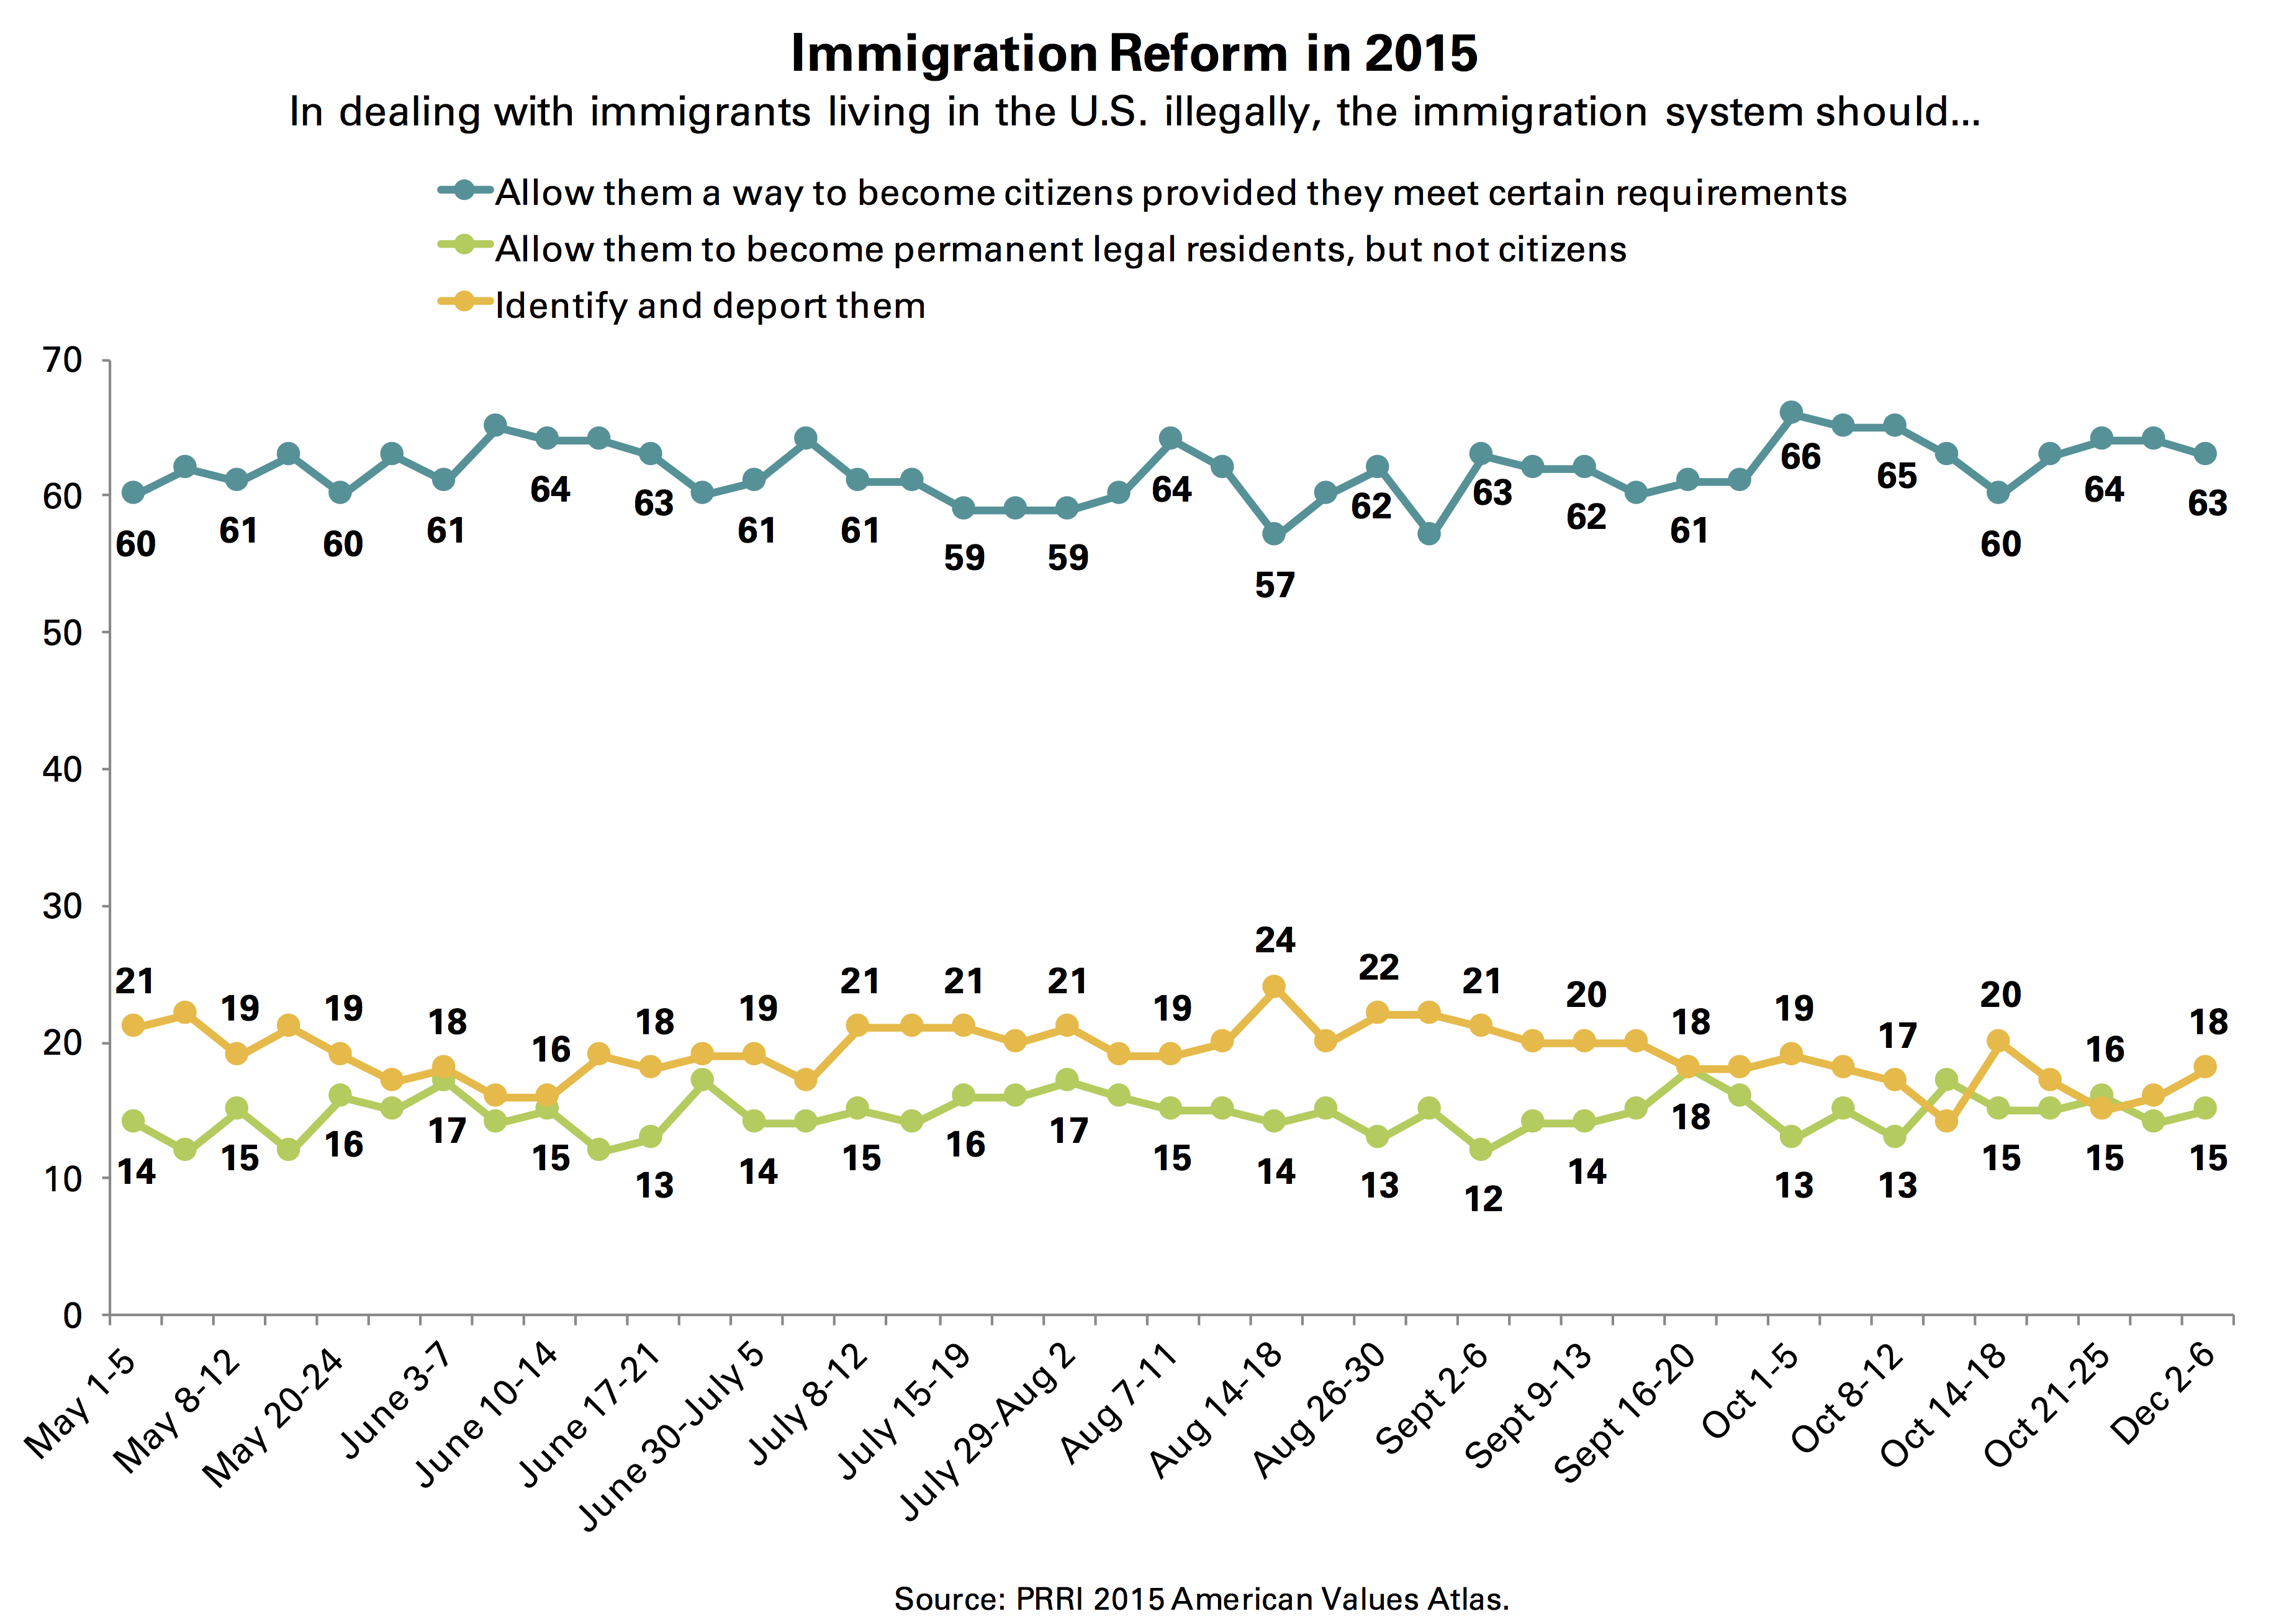 http://publicreligion.org/site/wp-content/uploads/2016/03/PRRI-AVA-immigration-reform-2015-trendline.jpg 